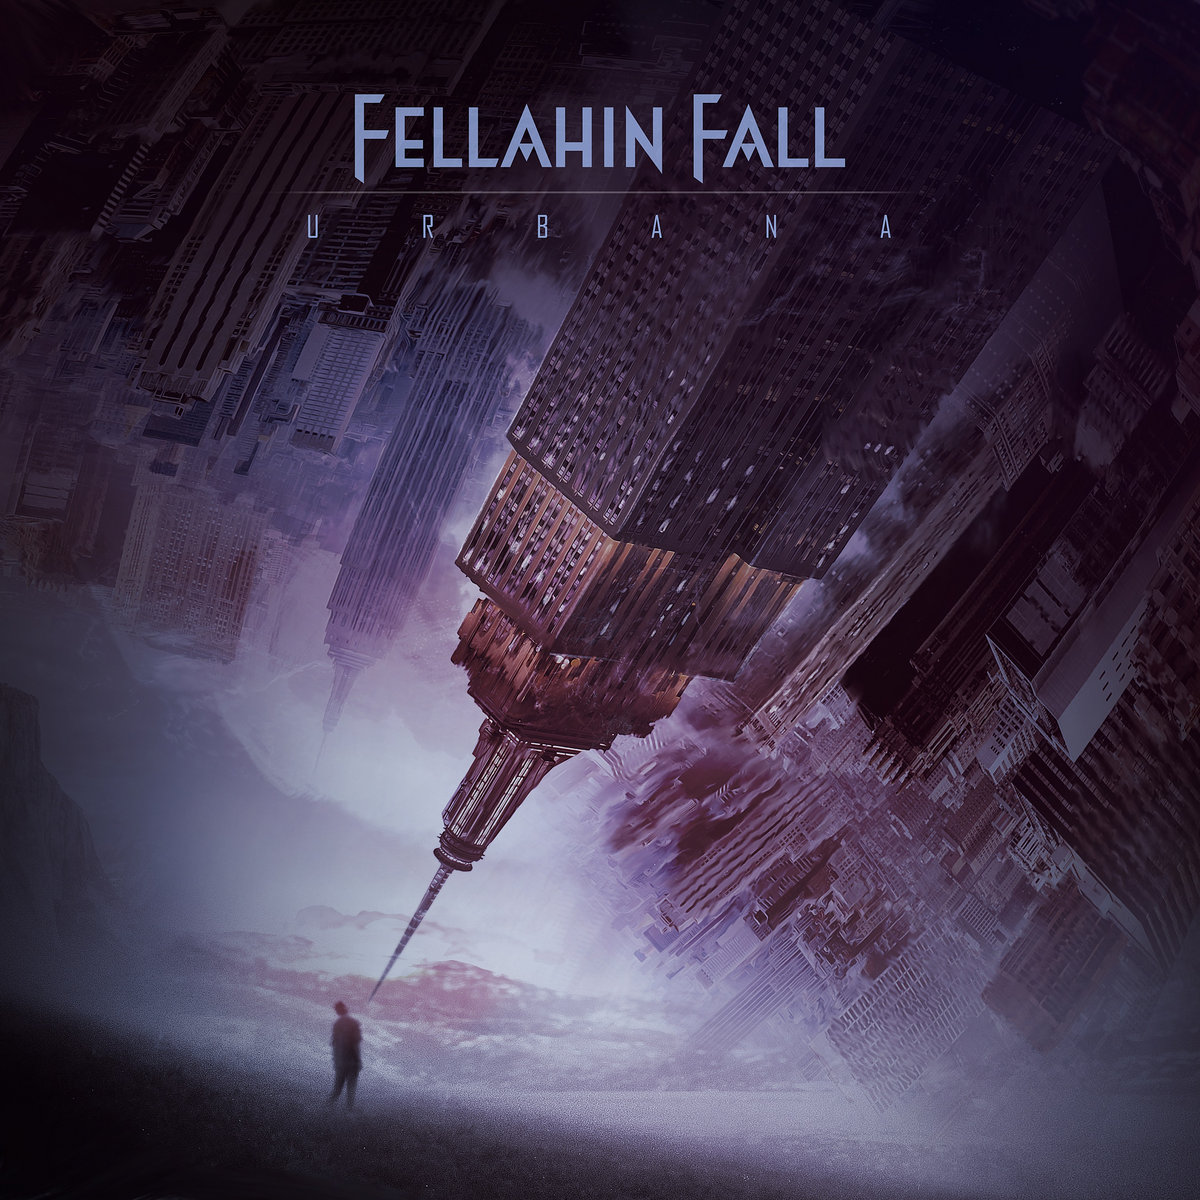 EP REVIEW: Urbana by Fellahin Fall